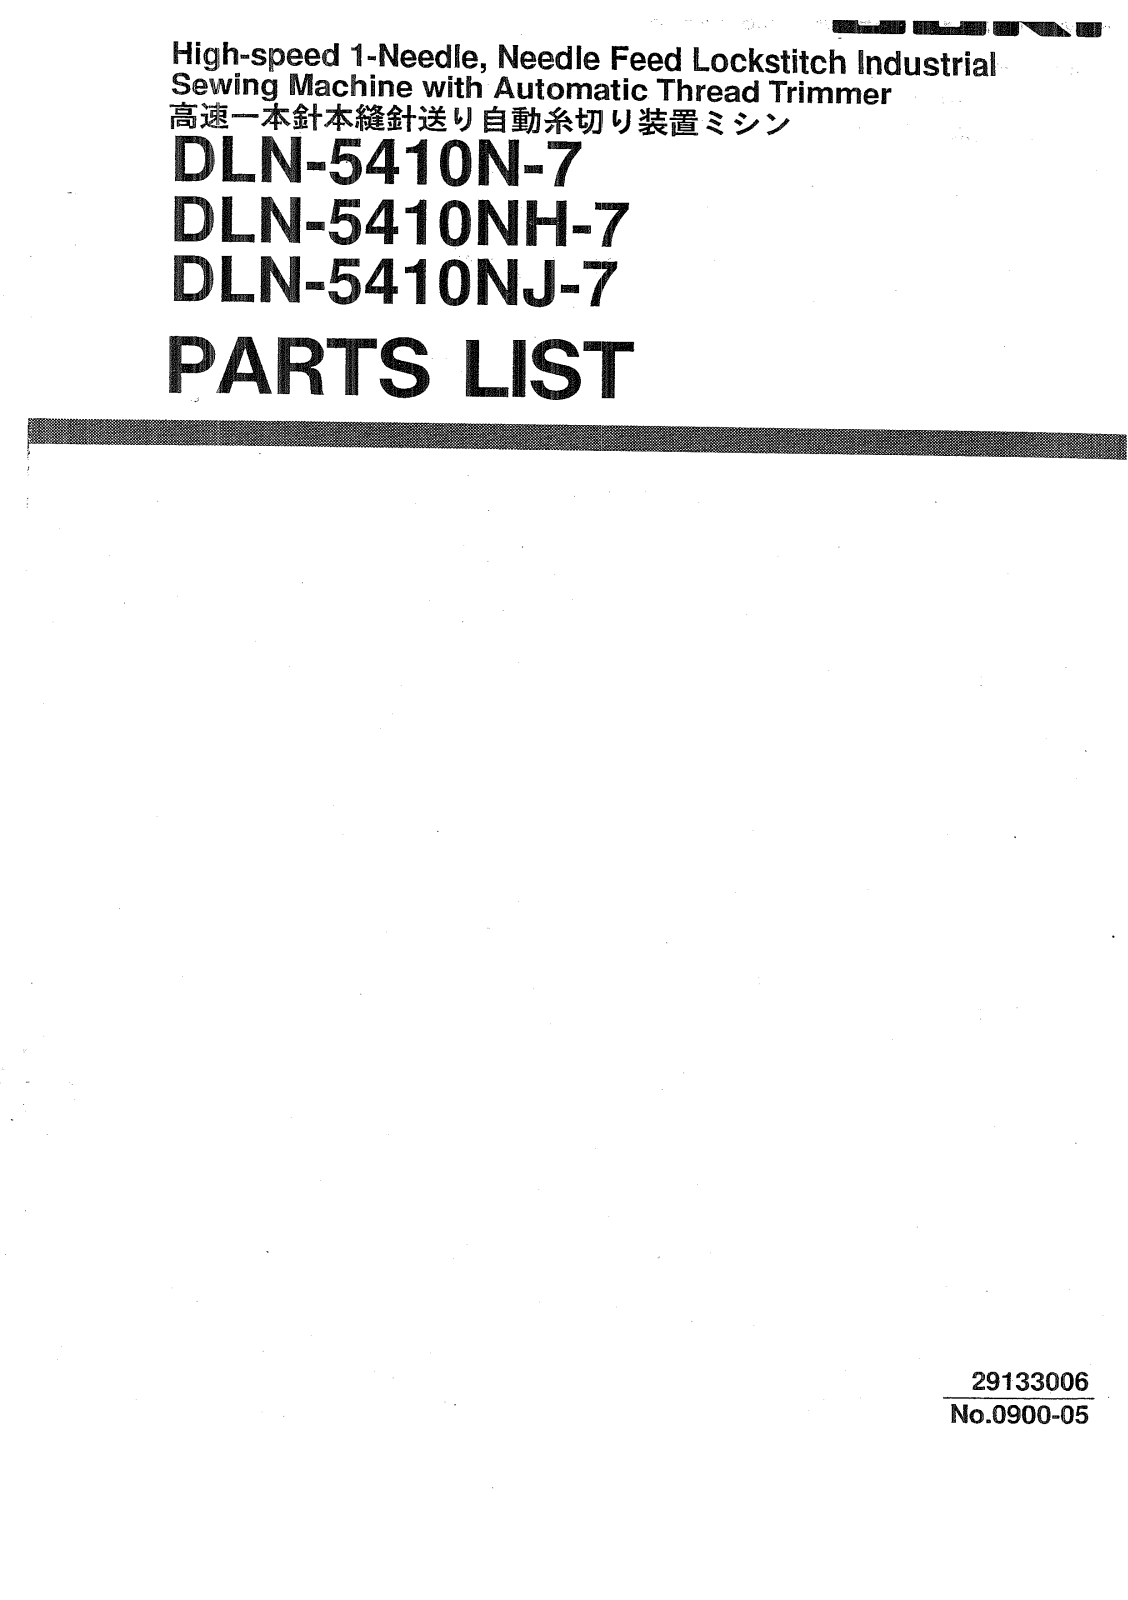 JUKI DLN-5410N-7, DLN-5410NH-7, DLN-5410NJ-7 Parts List